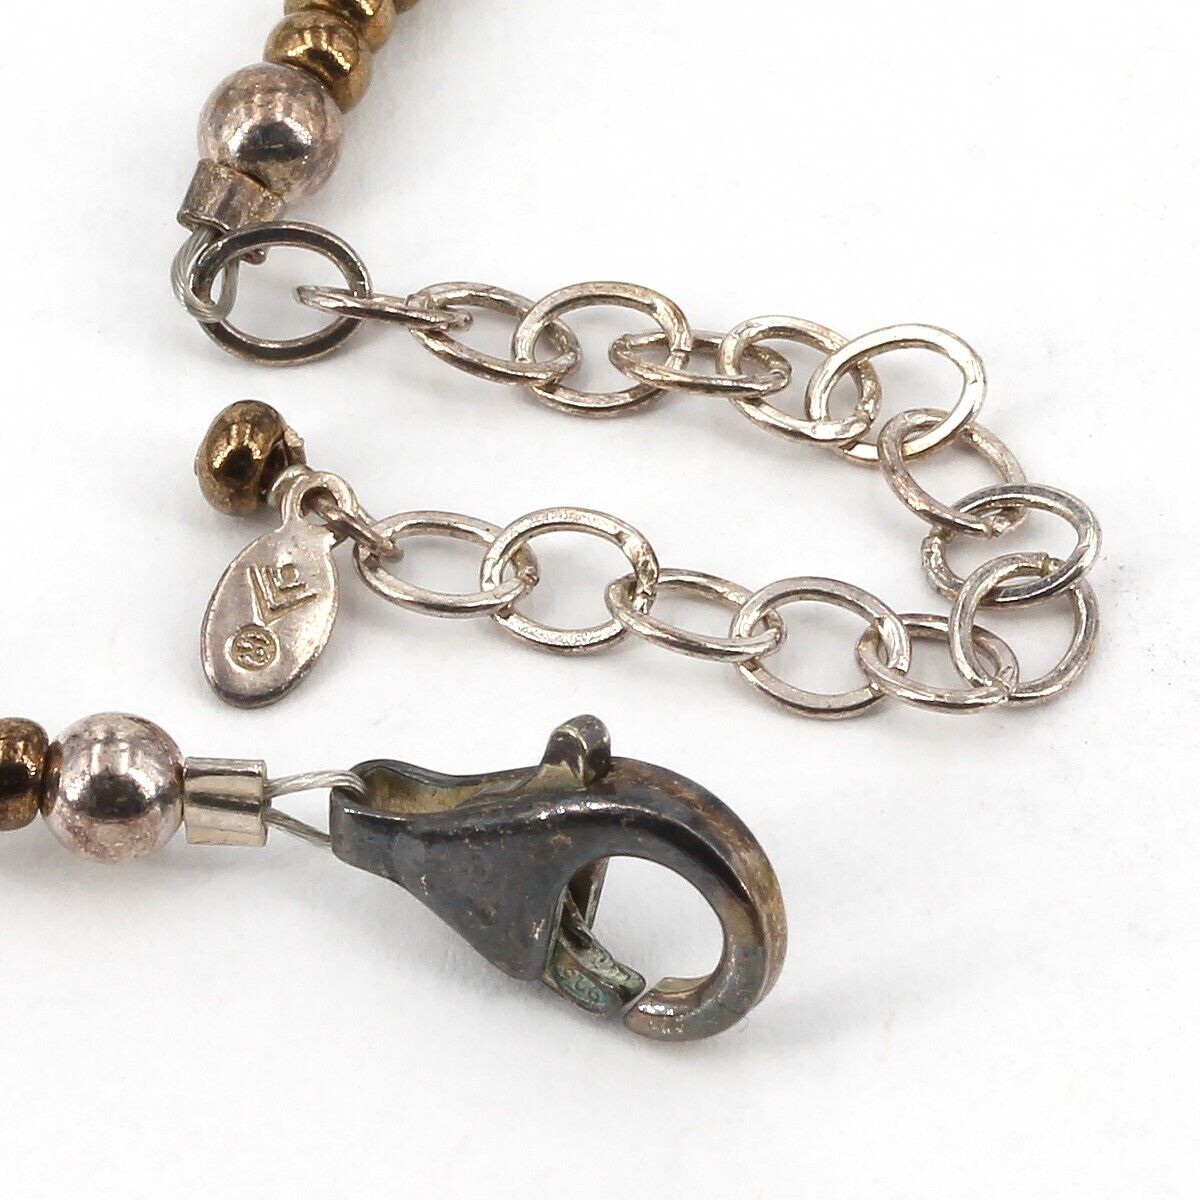 Retired Silpada Abalone Shell Metallic Bronze Bead Necklaces & Wrap Bracelet Set